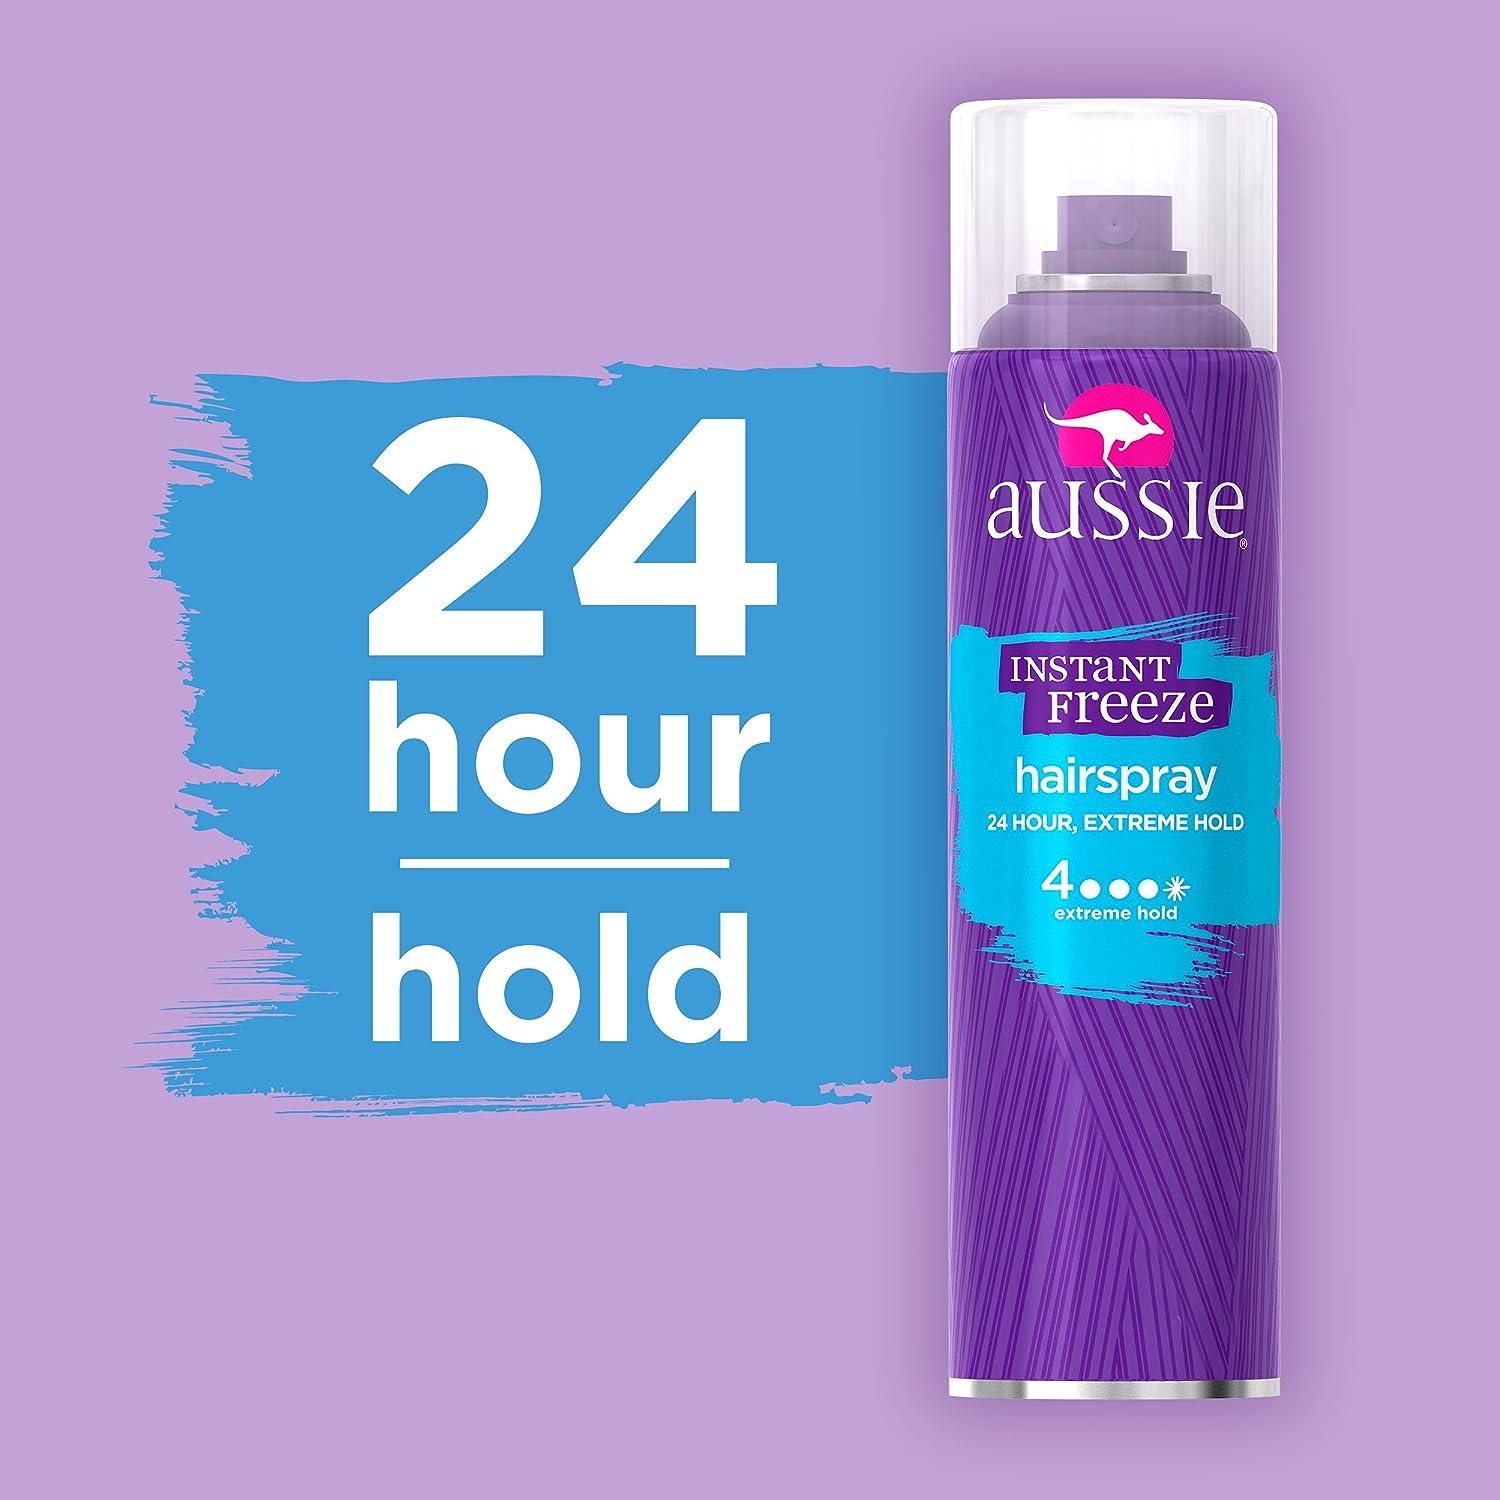 Aussie Instant Freeze Hairspray with Jojoba Oil, 7.0 oz, 2 Pack 